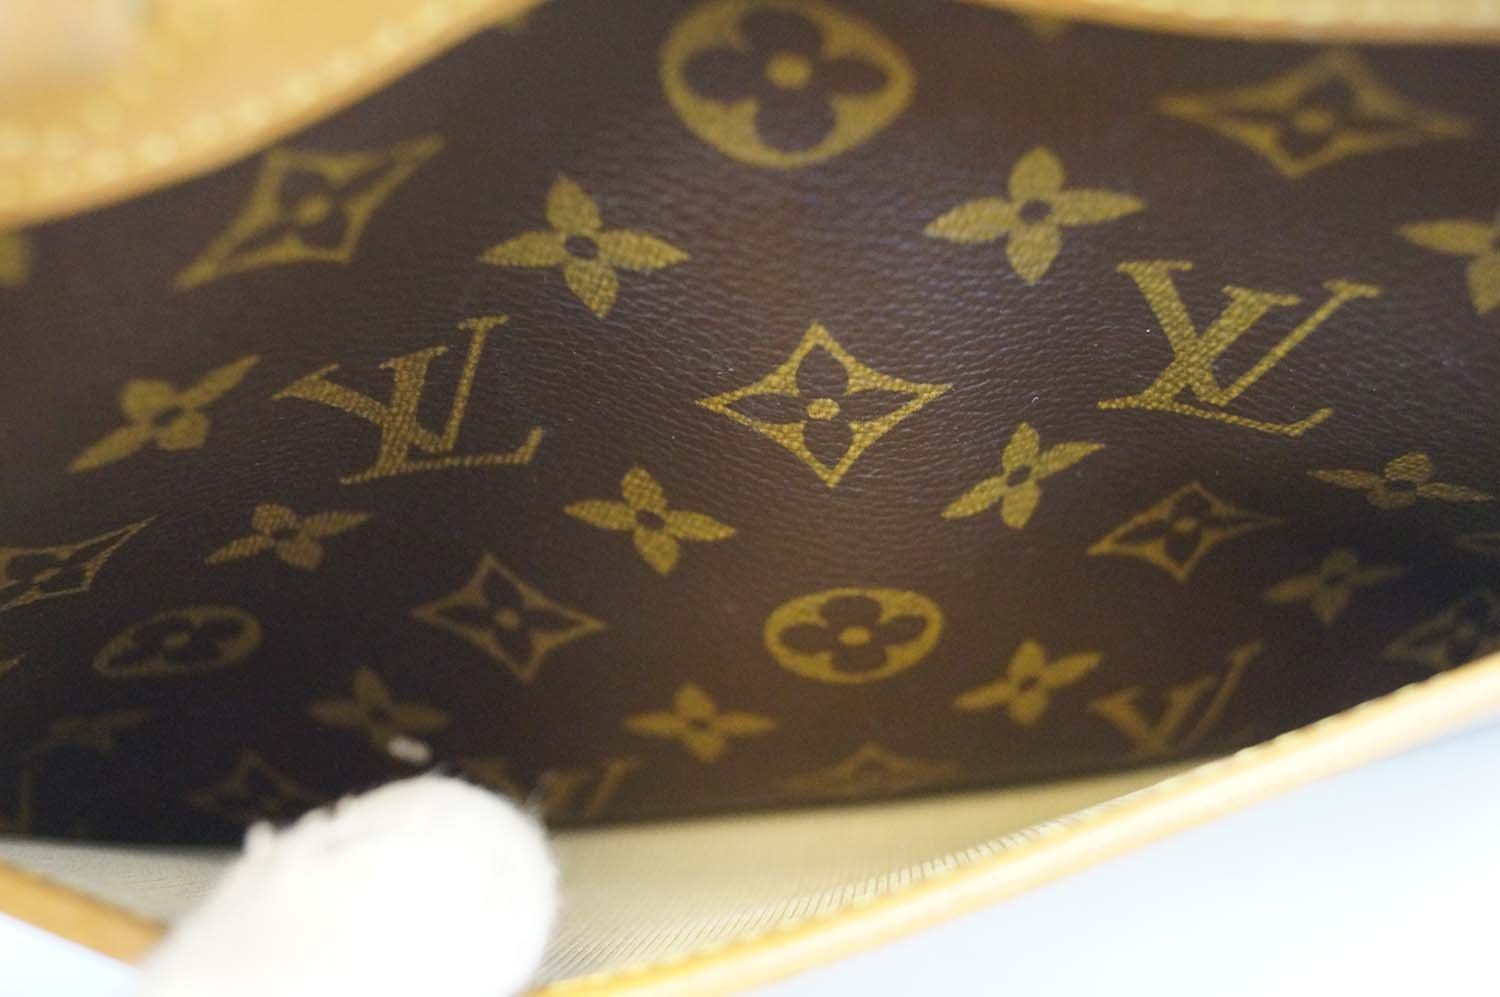 Pre-Owned Authenticated Louis Vuitton Monogram Trouville Calf